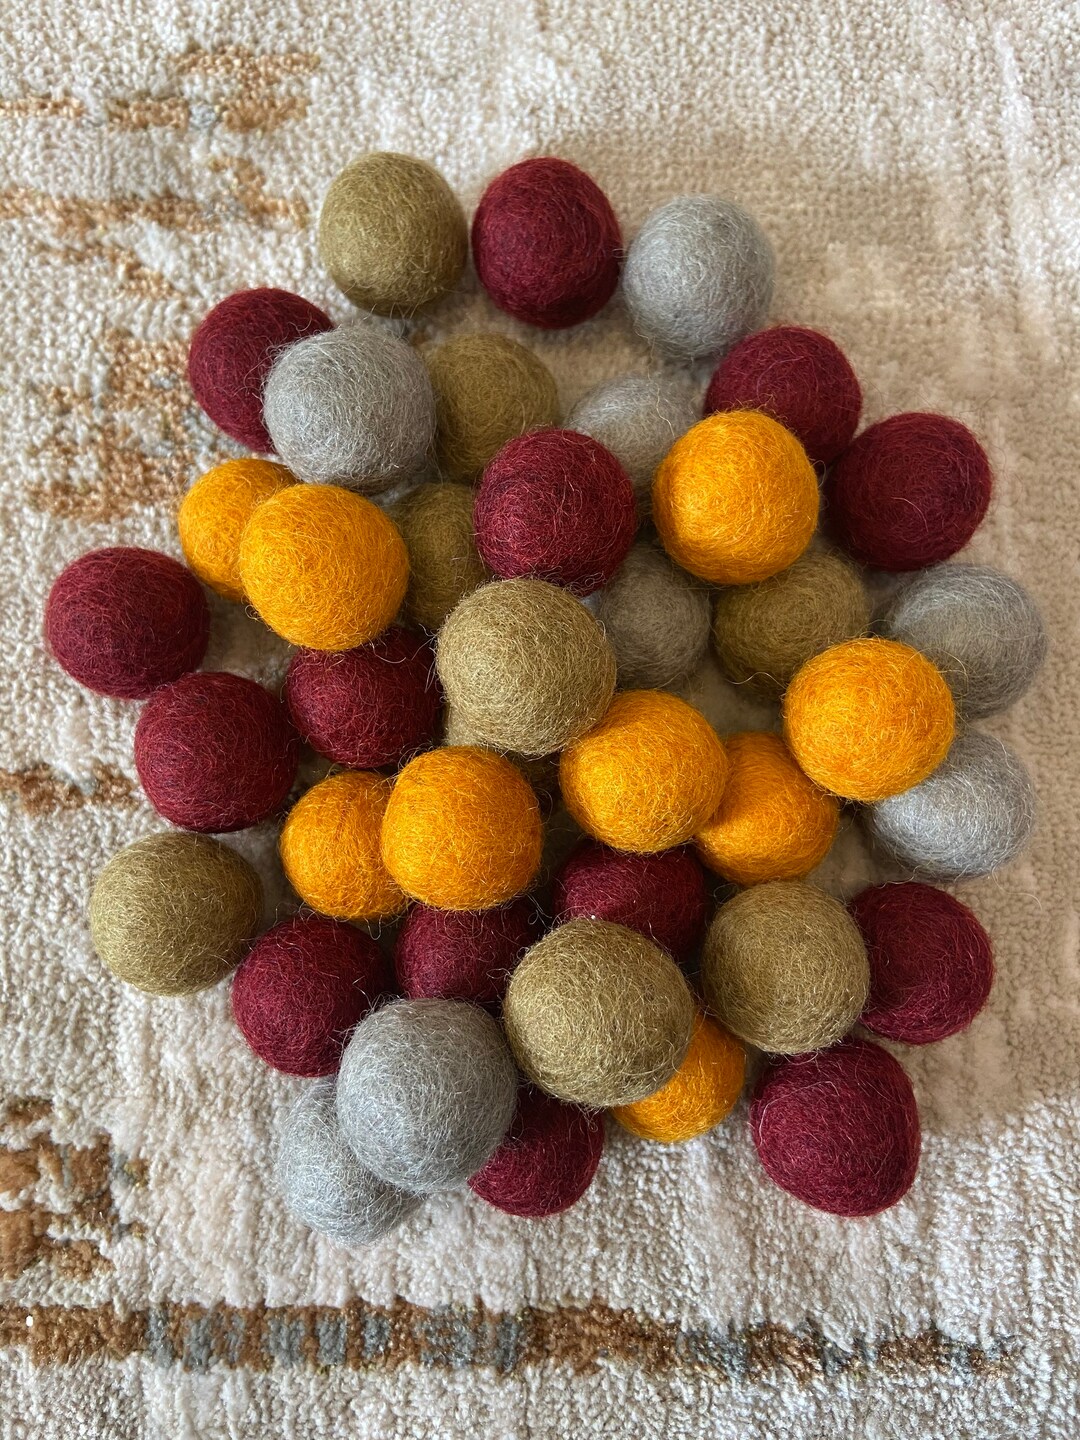 10pcs 2cm 100% Wool Wool Felt Balls Lovely Diy Round Wool Ball Colorful Pom  Poms craft Supplies goods for handcraft Home Decro